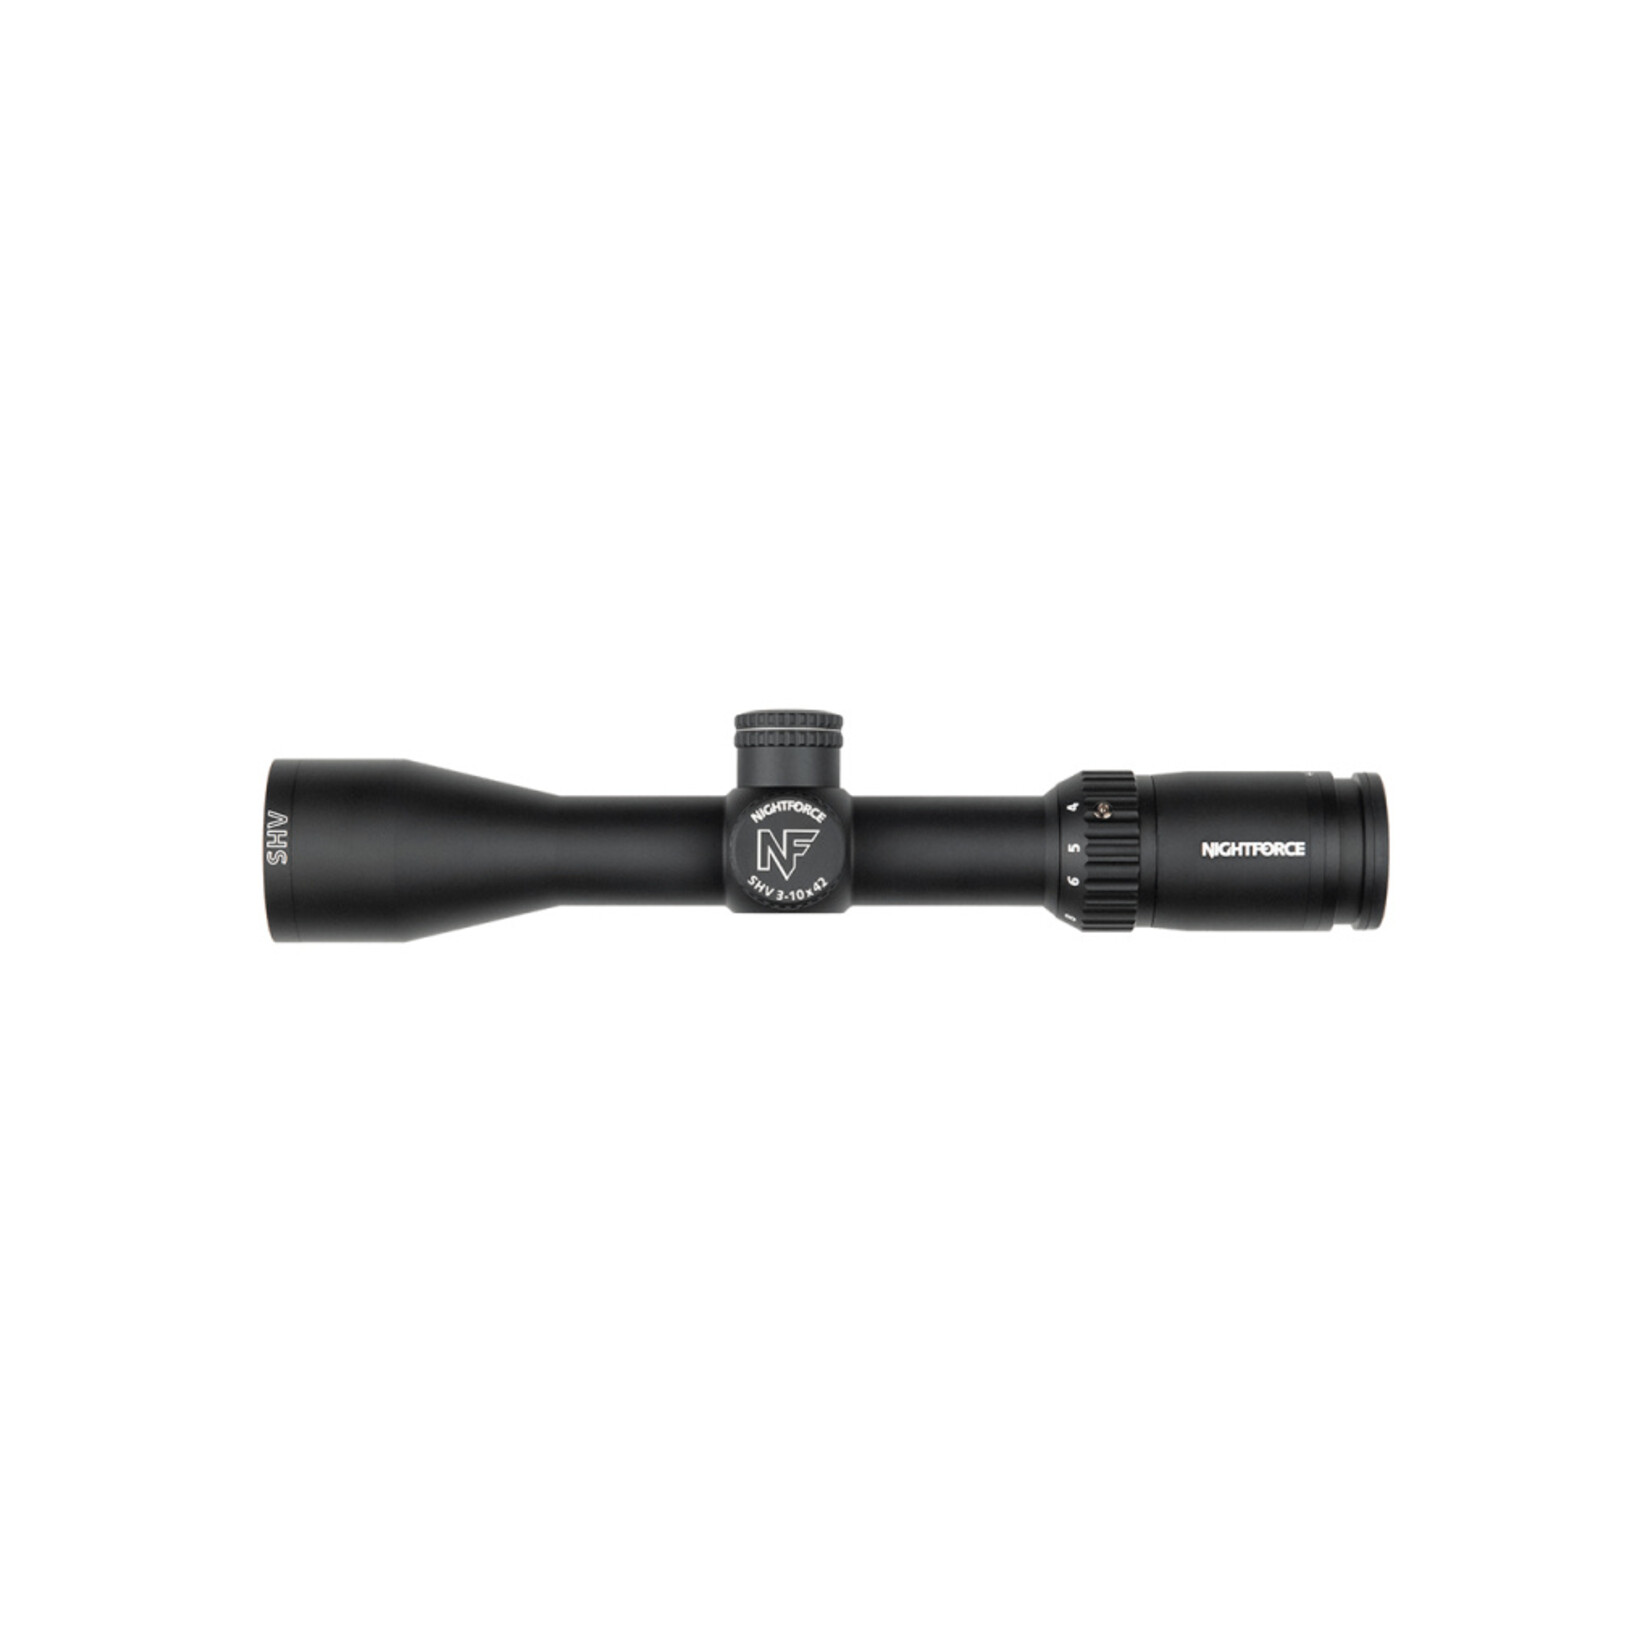 Nightforce Optics SHV 3-10x42mm .250 Illuminated Forceplex Riflescope